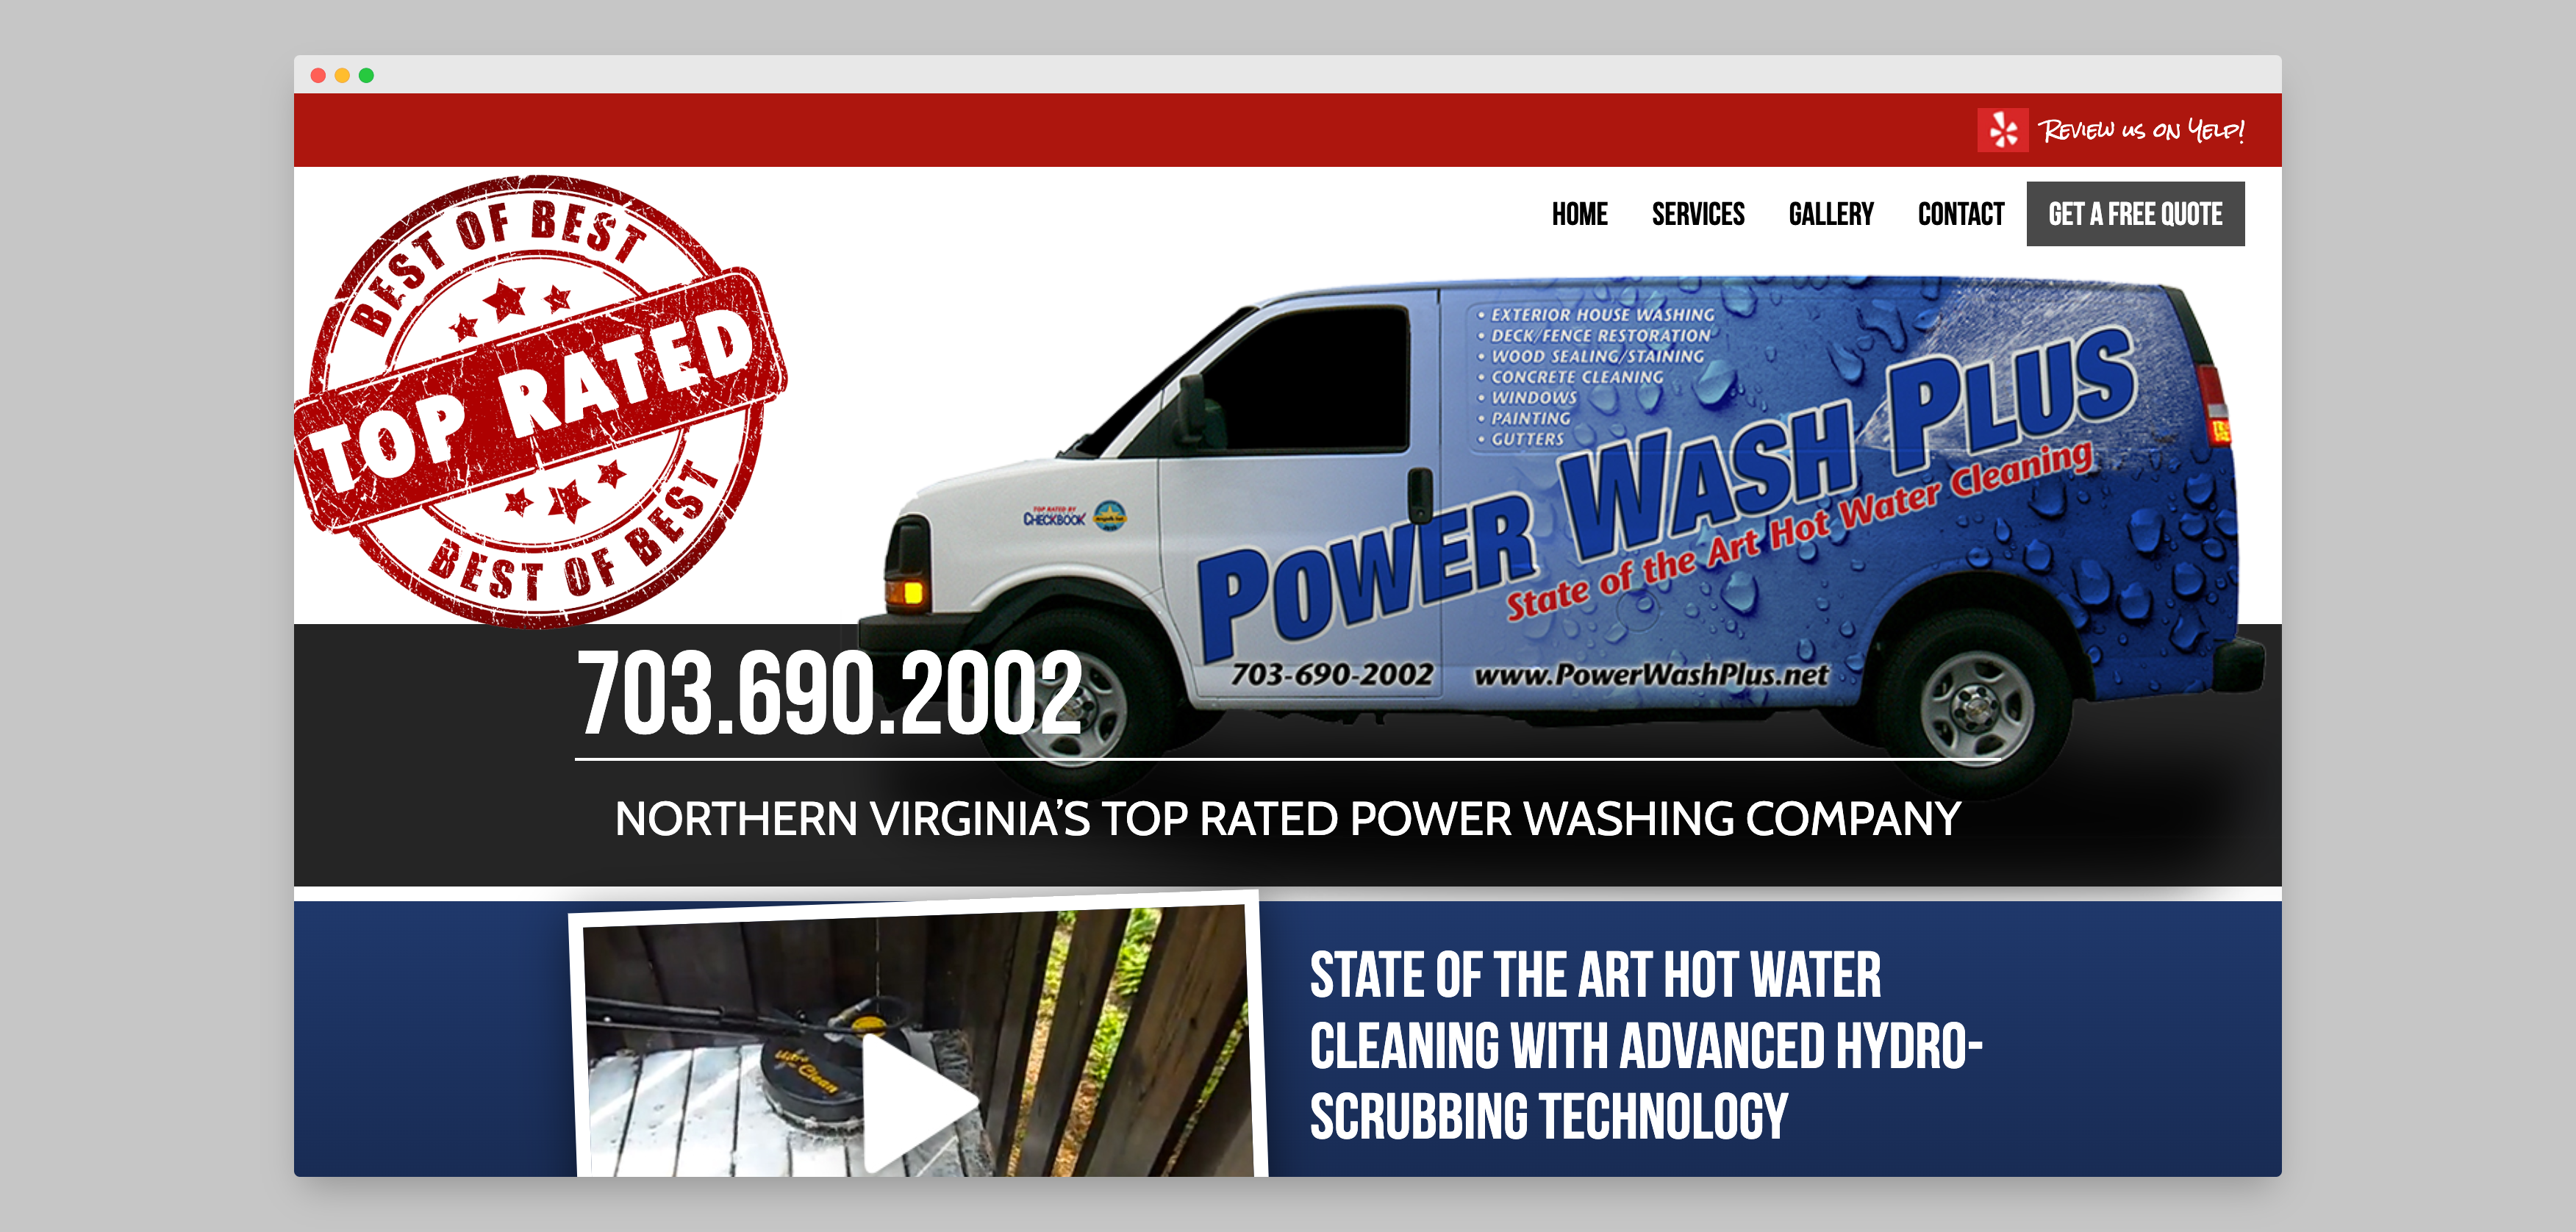 Power Wash Plus Website